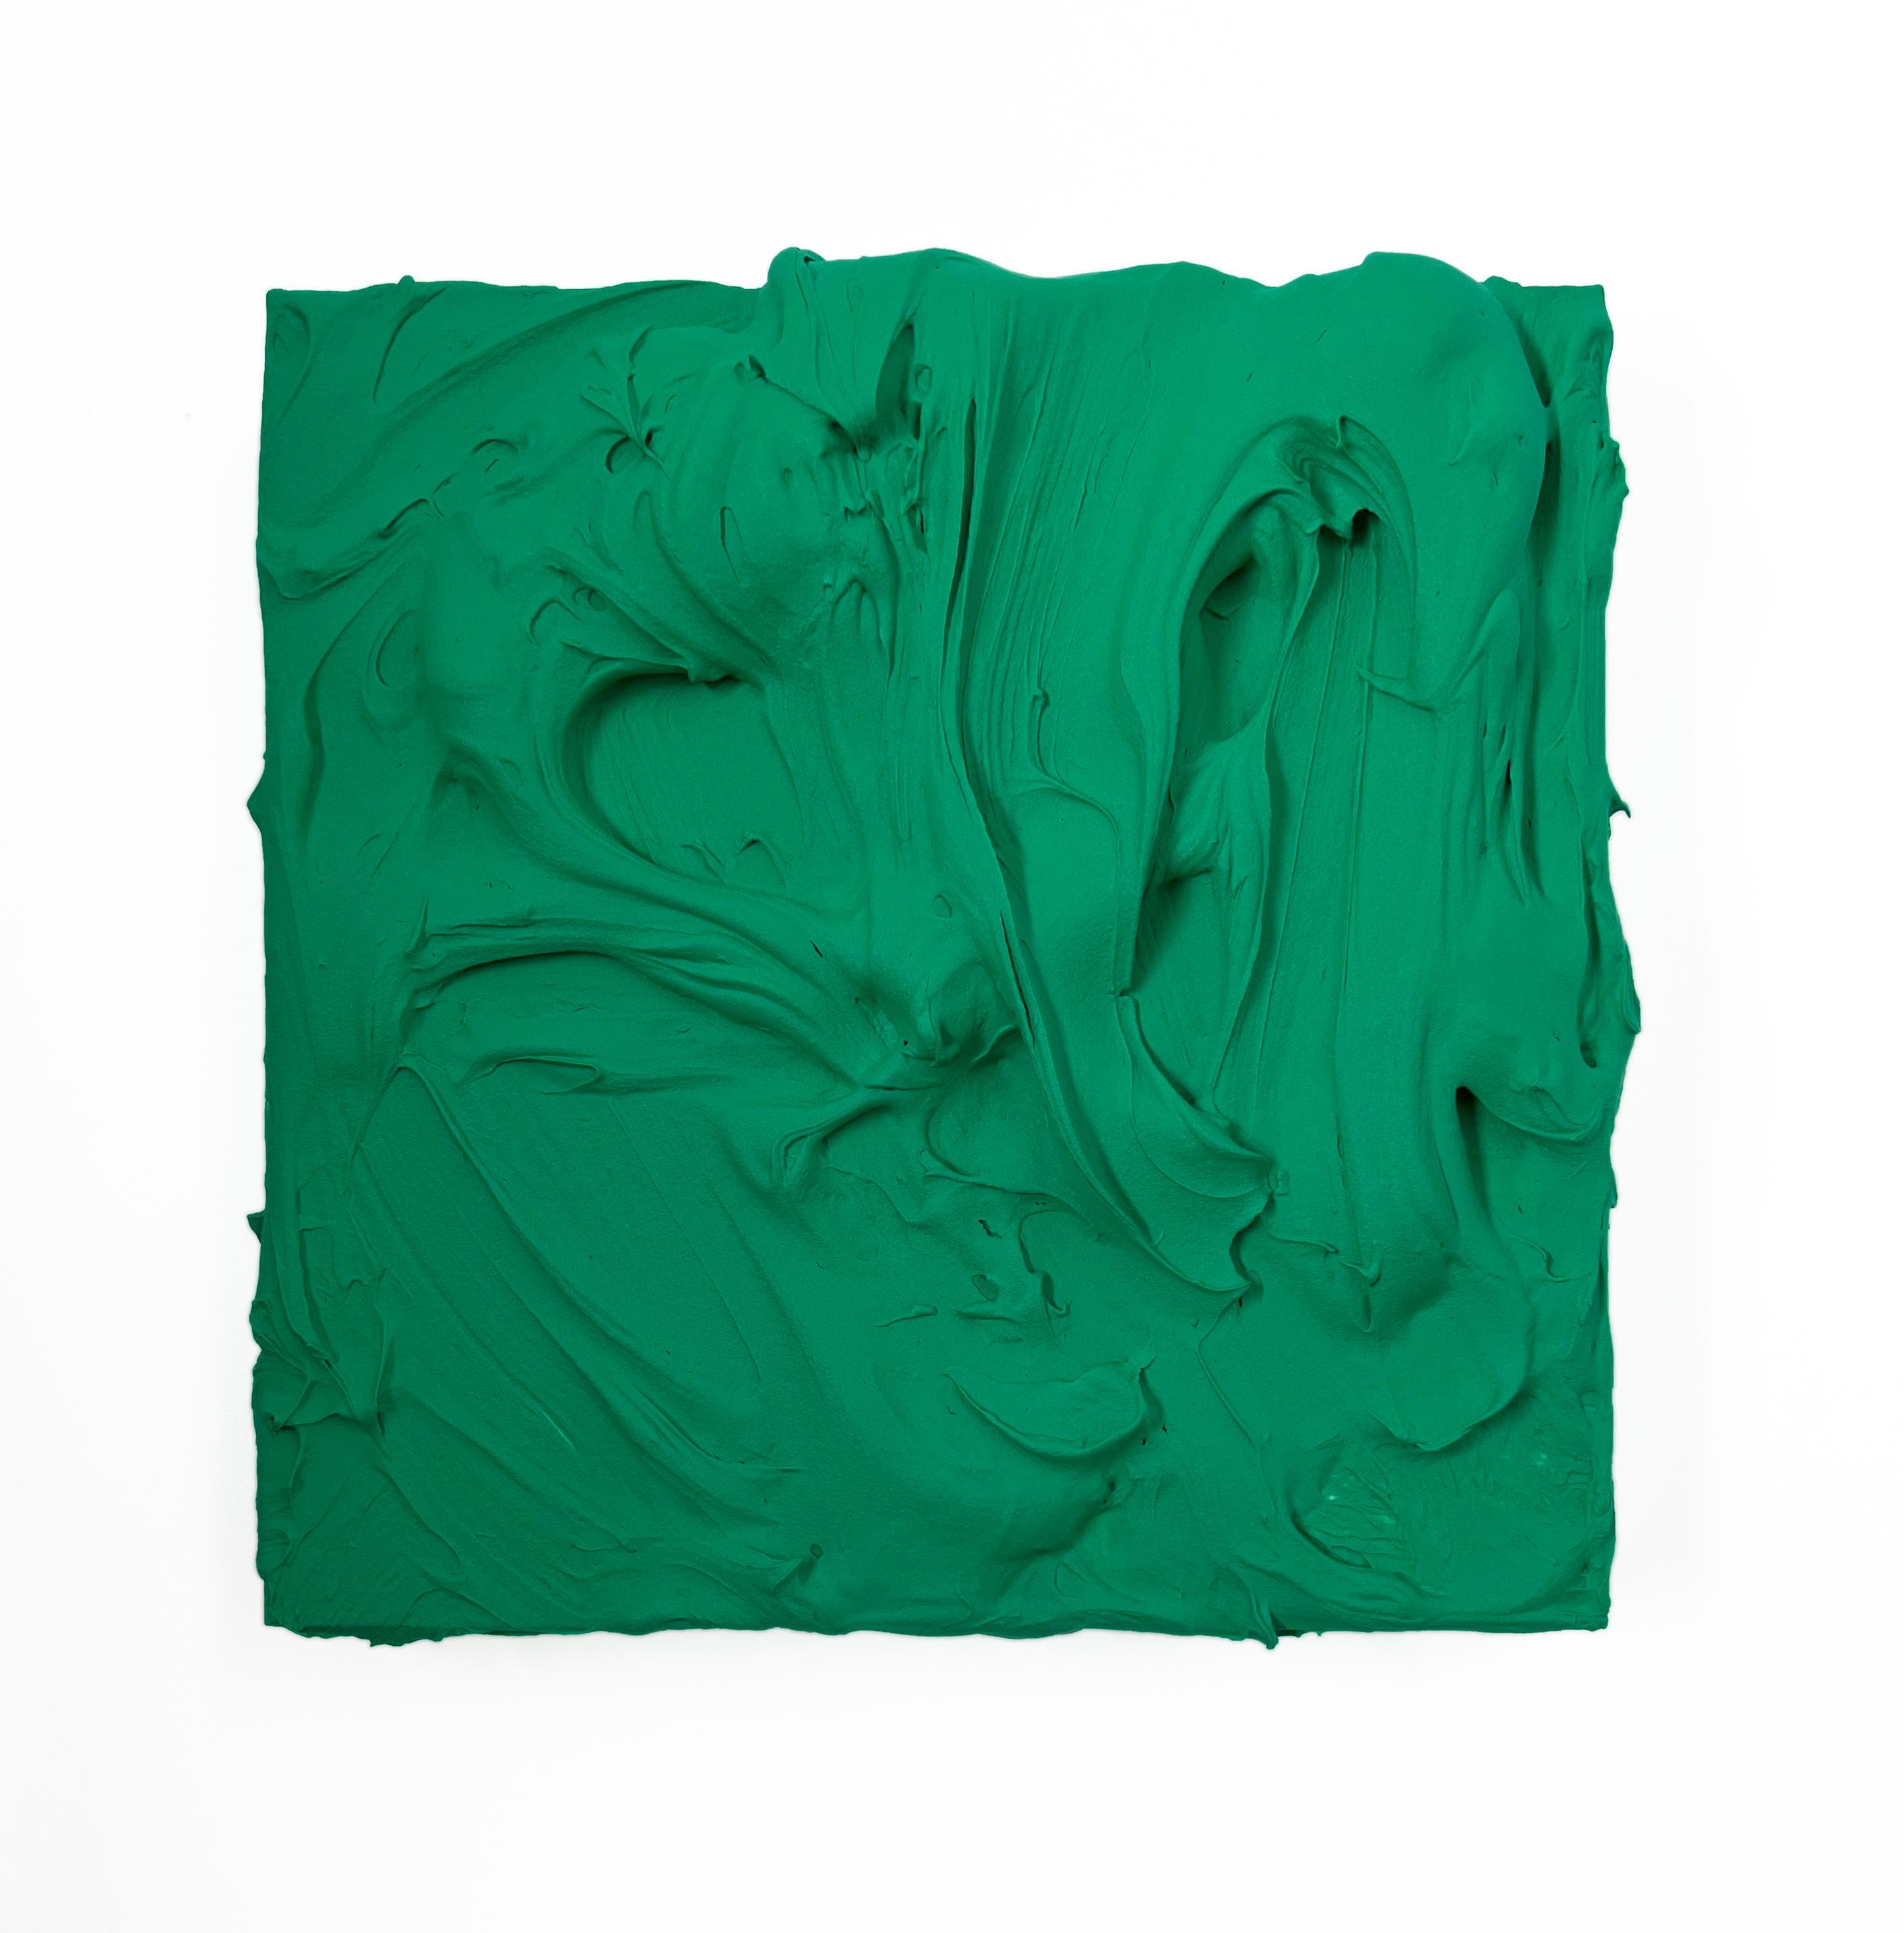 Emerald Green Excess (impasto thick painting monochrome pop art square design)